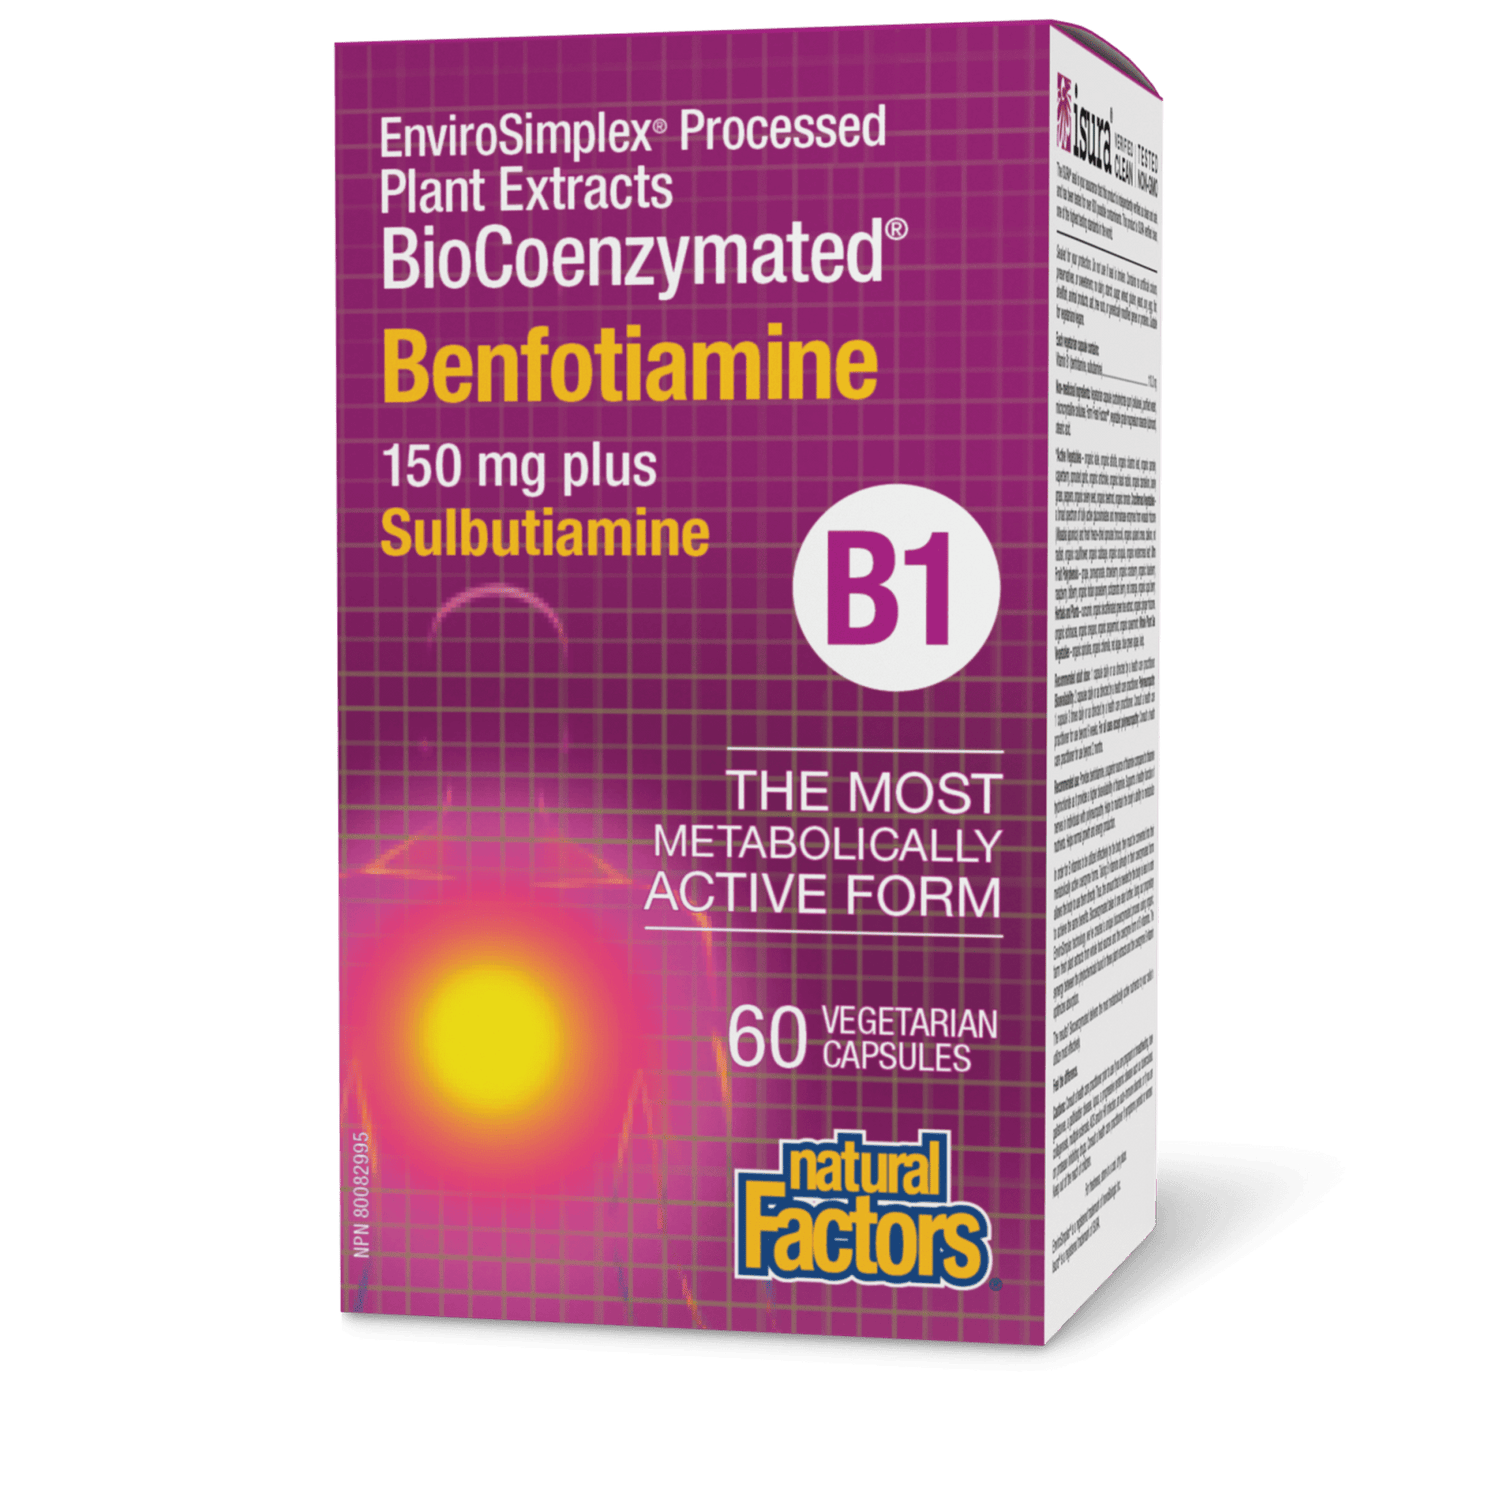 BioCoenzymated Benfotiamine • B1 plus Sulbutiamine, Natural Factors|v|image|1258